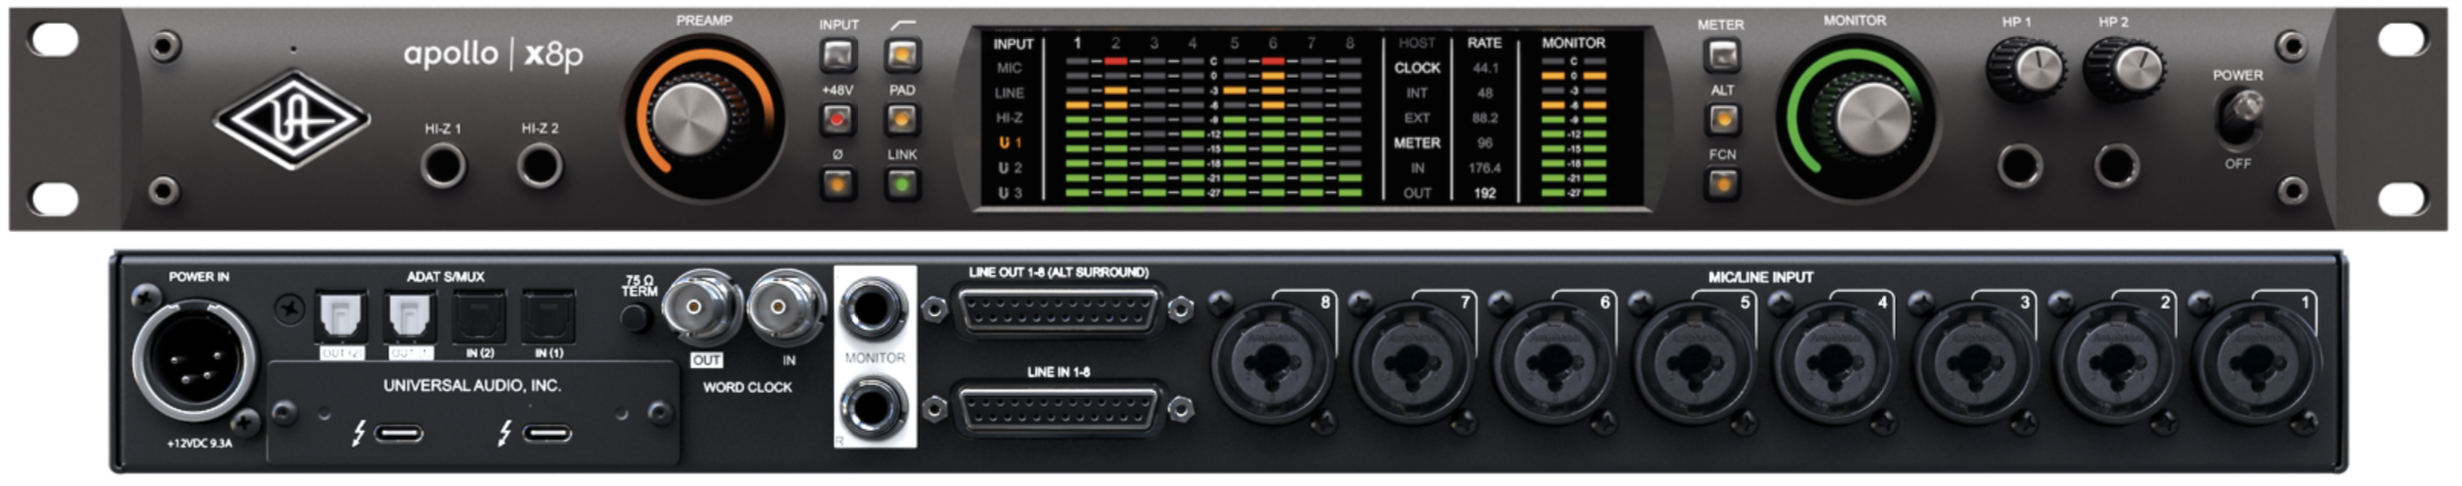 Universal Audio Apollo X8p - Thunderbolt audio interface - Variation 4